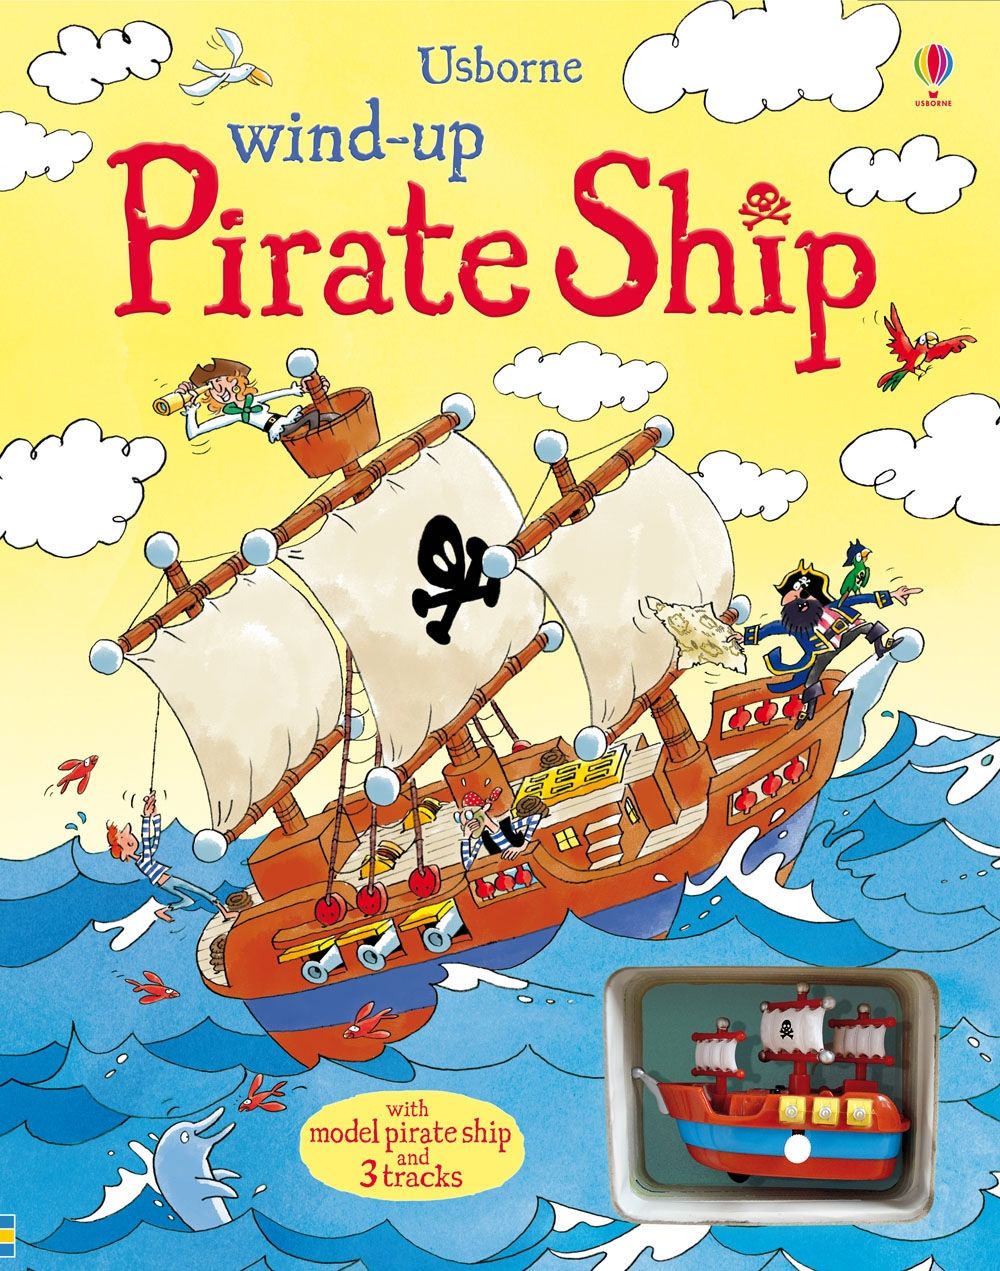 Wind-up: Pirate Ship